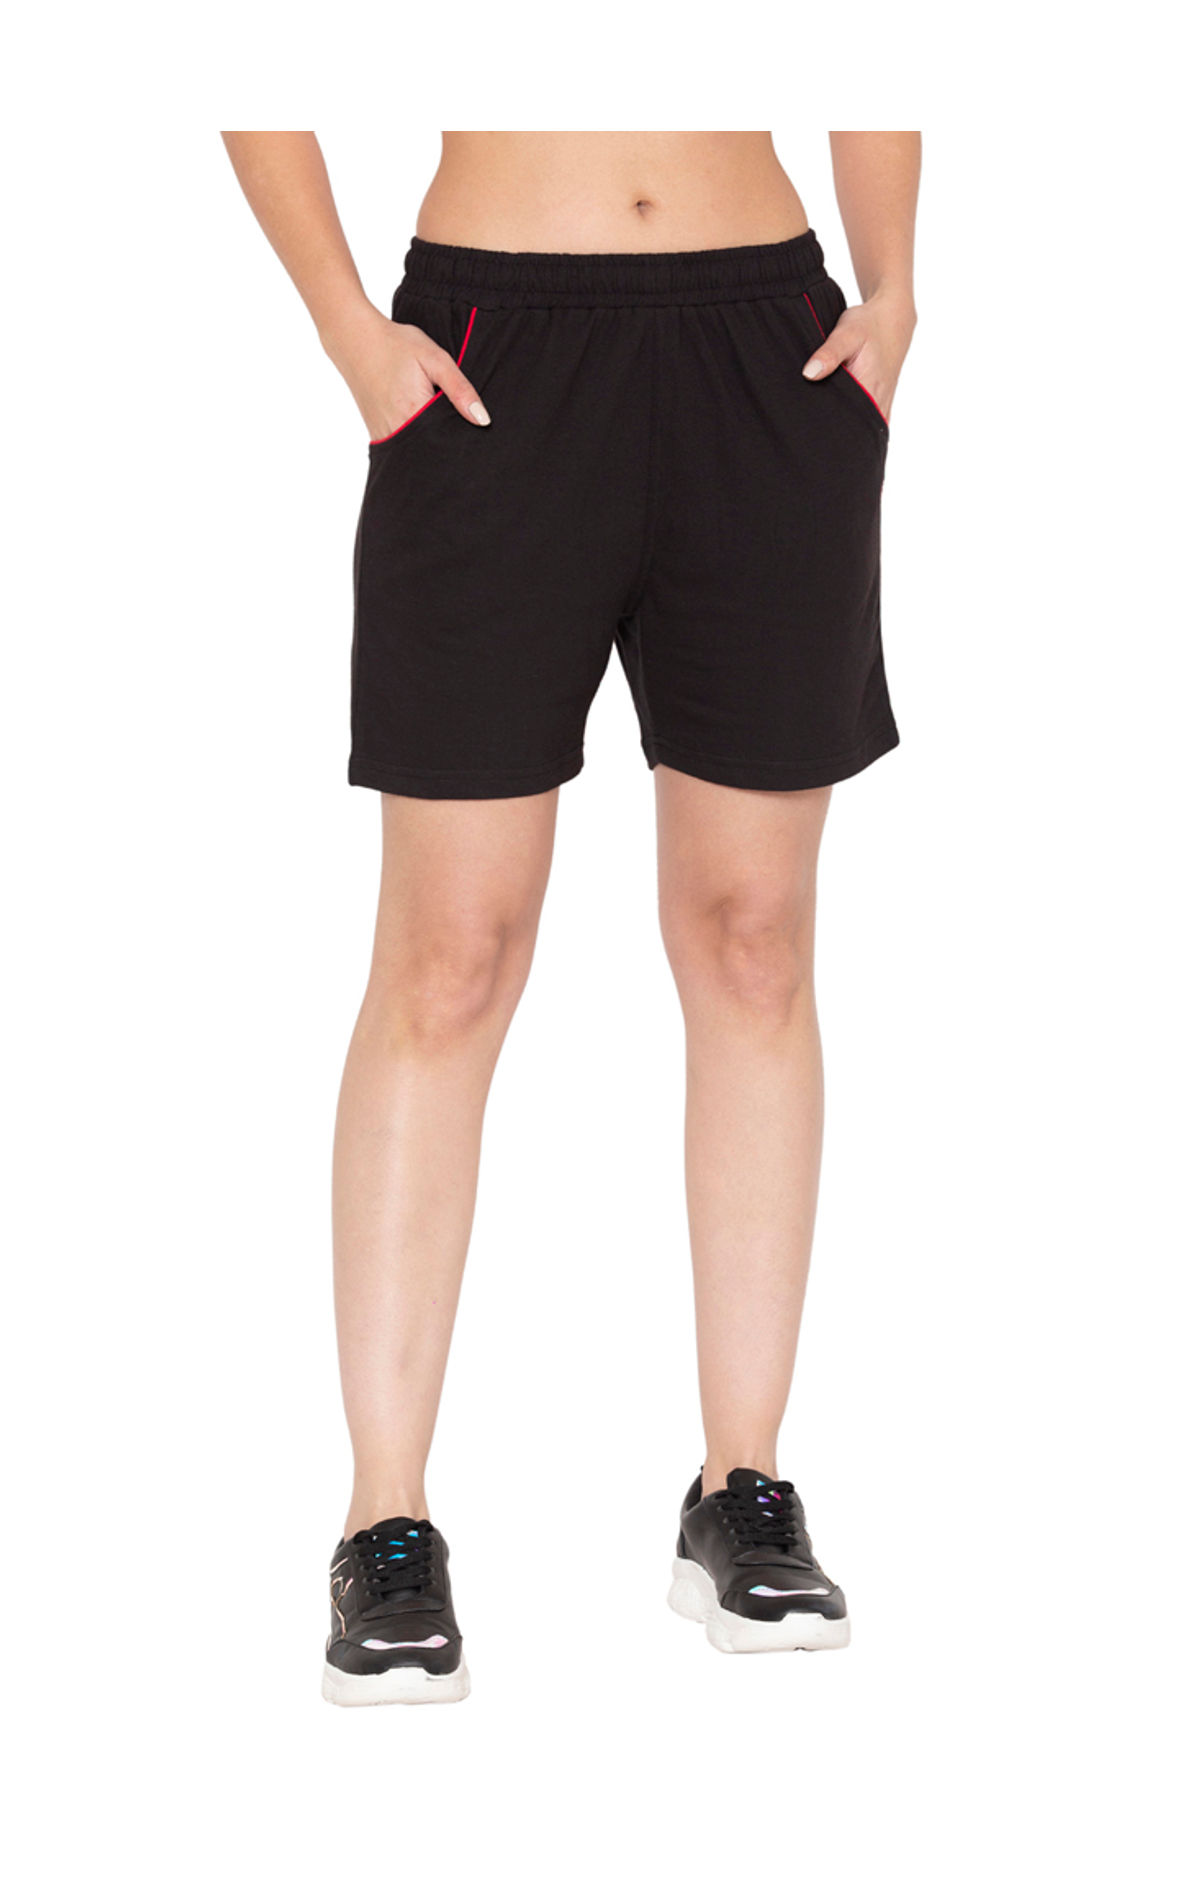 Bodyactive Women Black Cotton Shorts with Pockets -SHW2-BLK/RAN